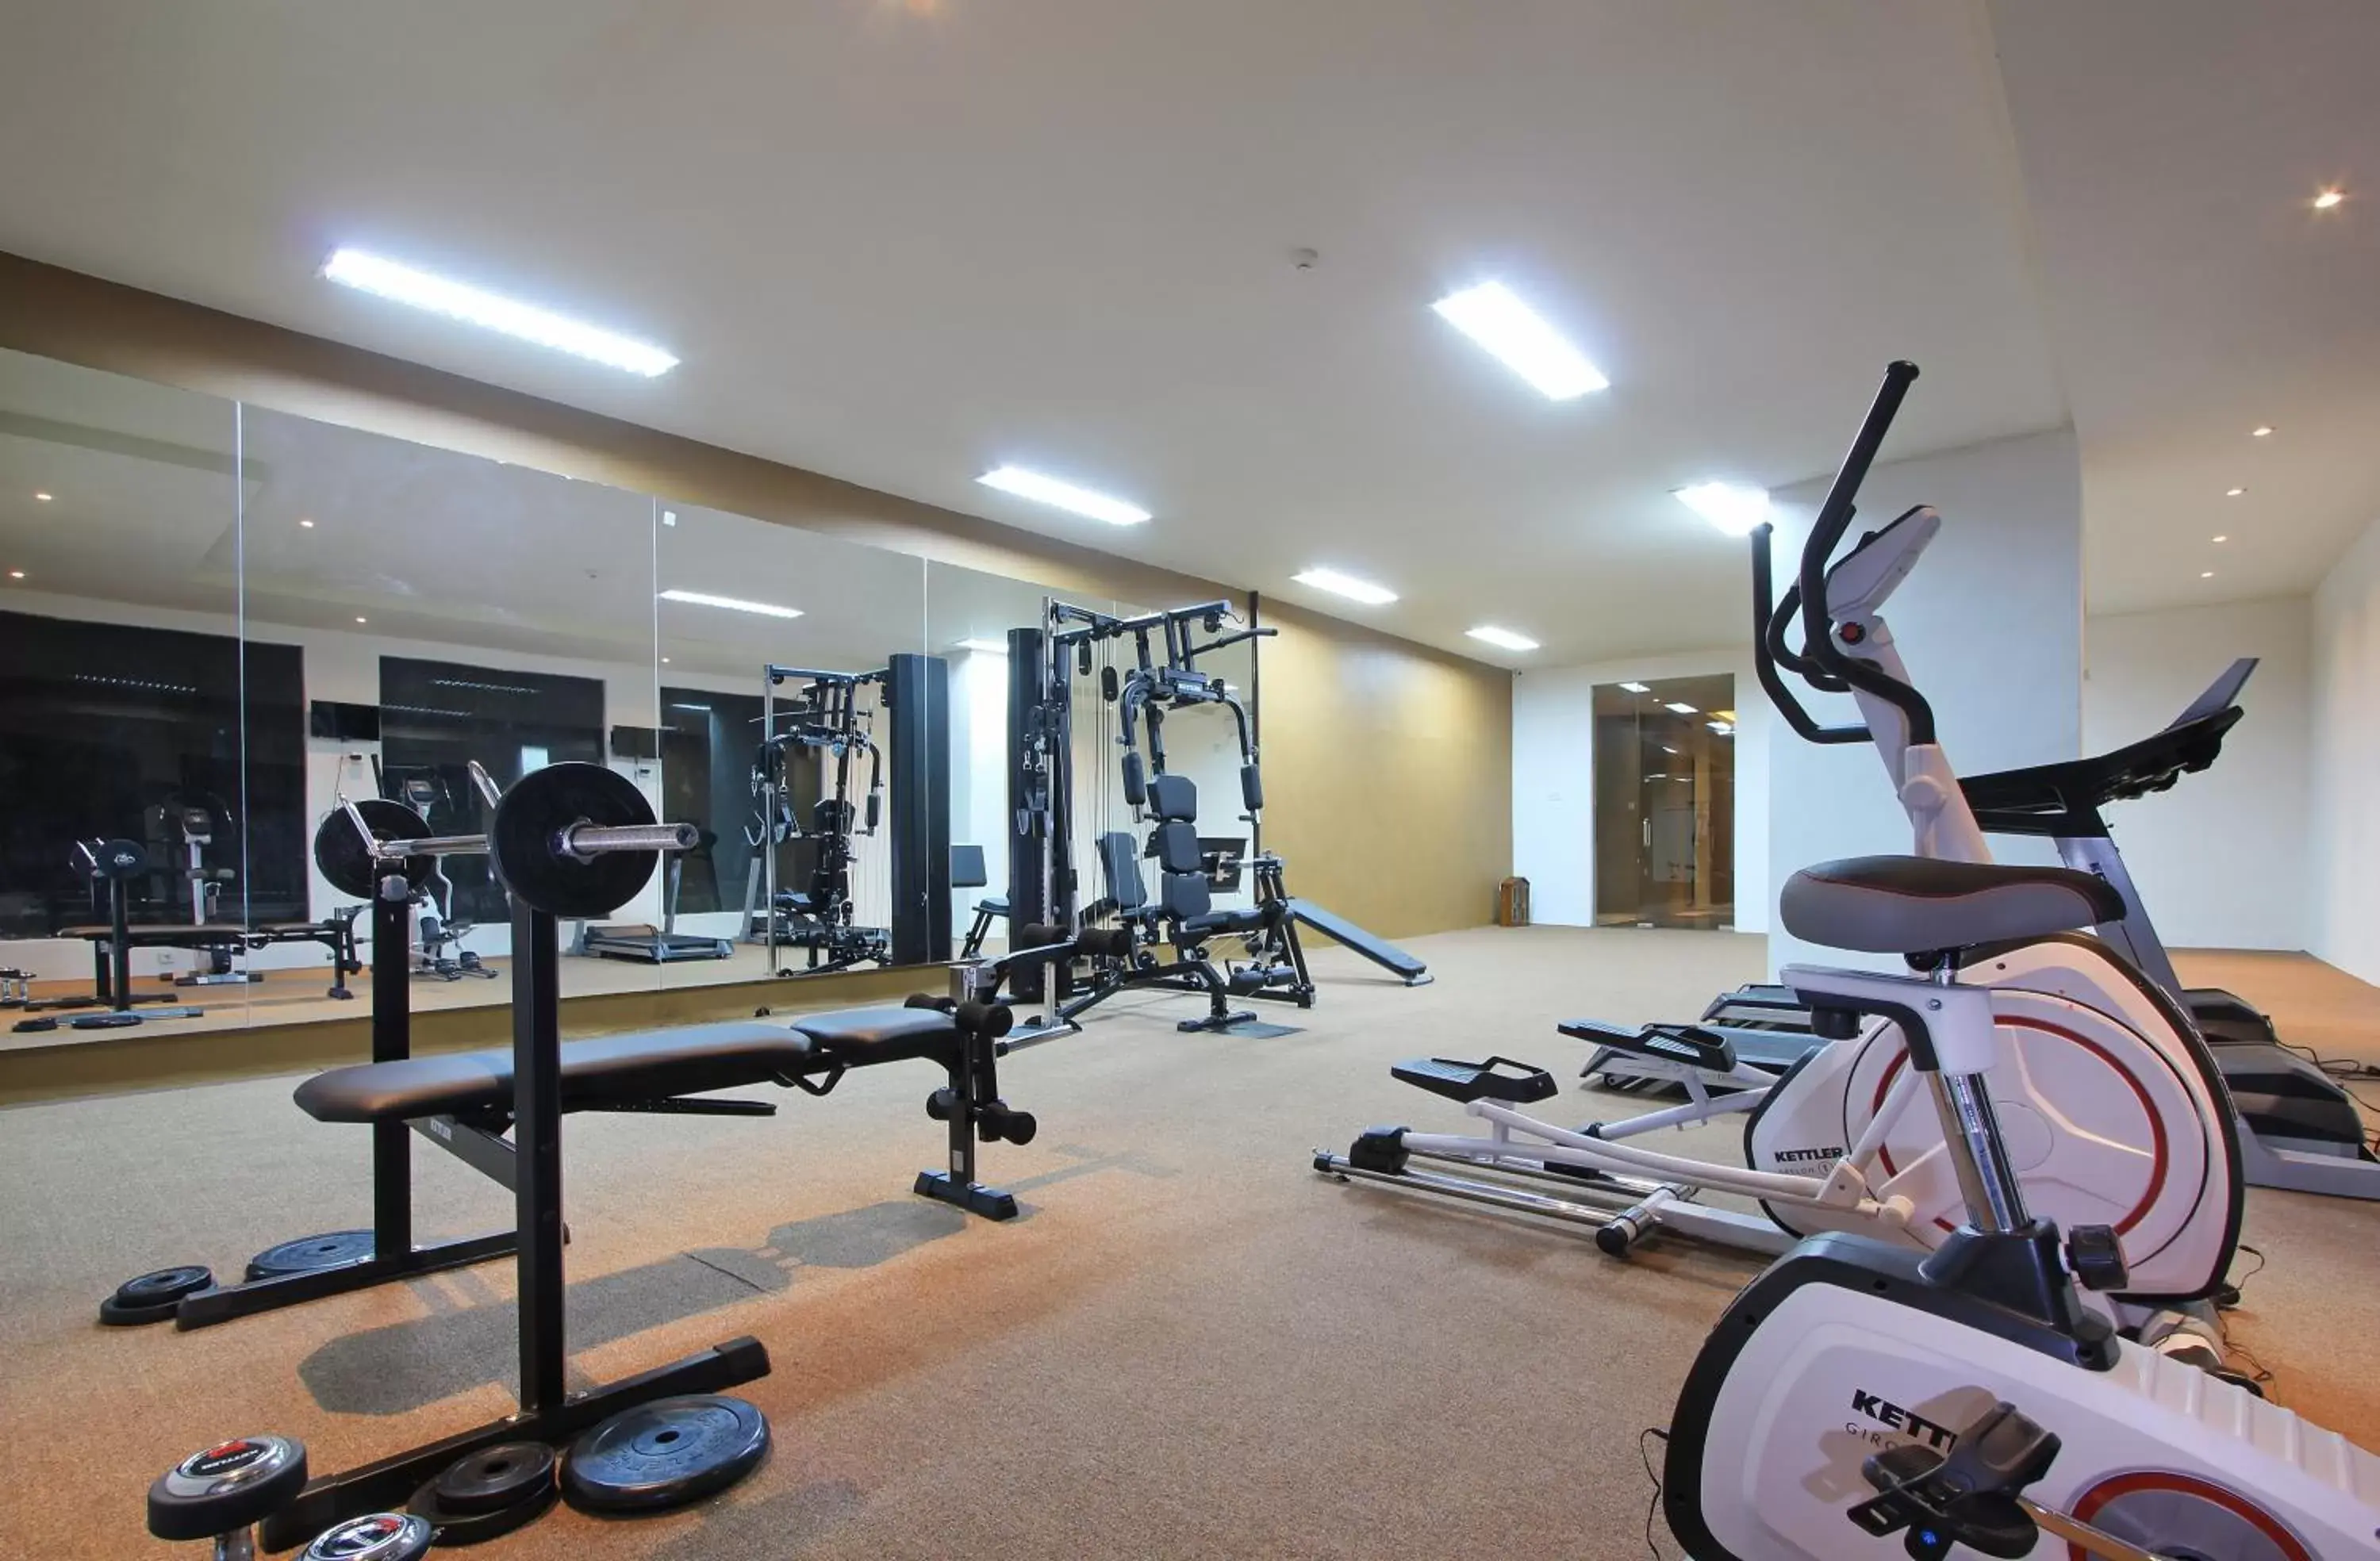 Fitness centre/facilities, Fitness Center/Facilities in Ulu Segara Luxury Suites & Villas